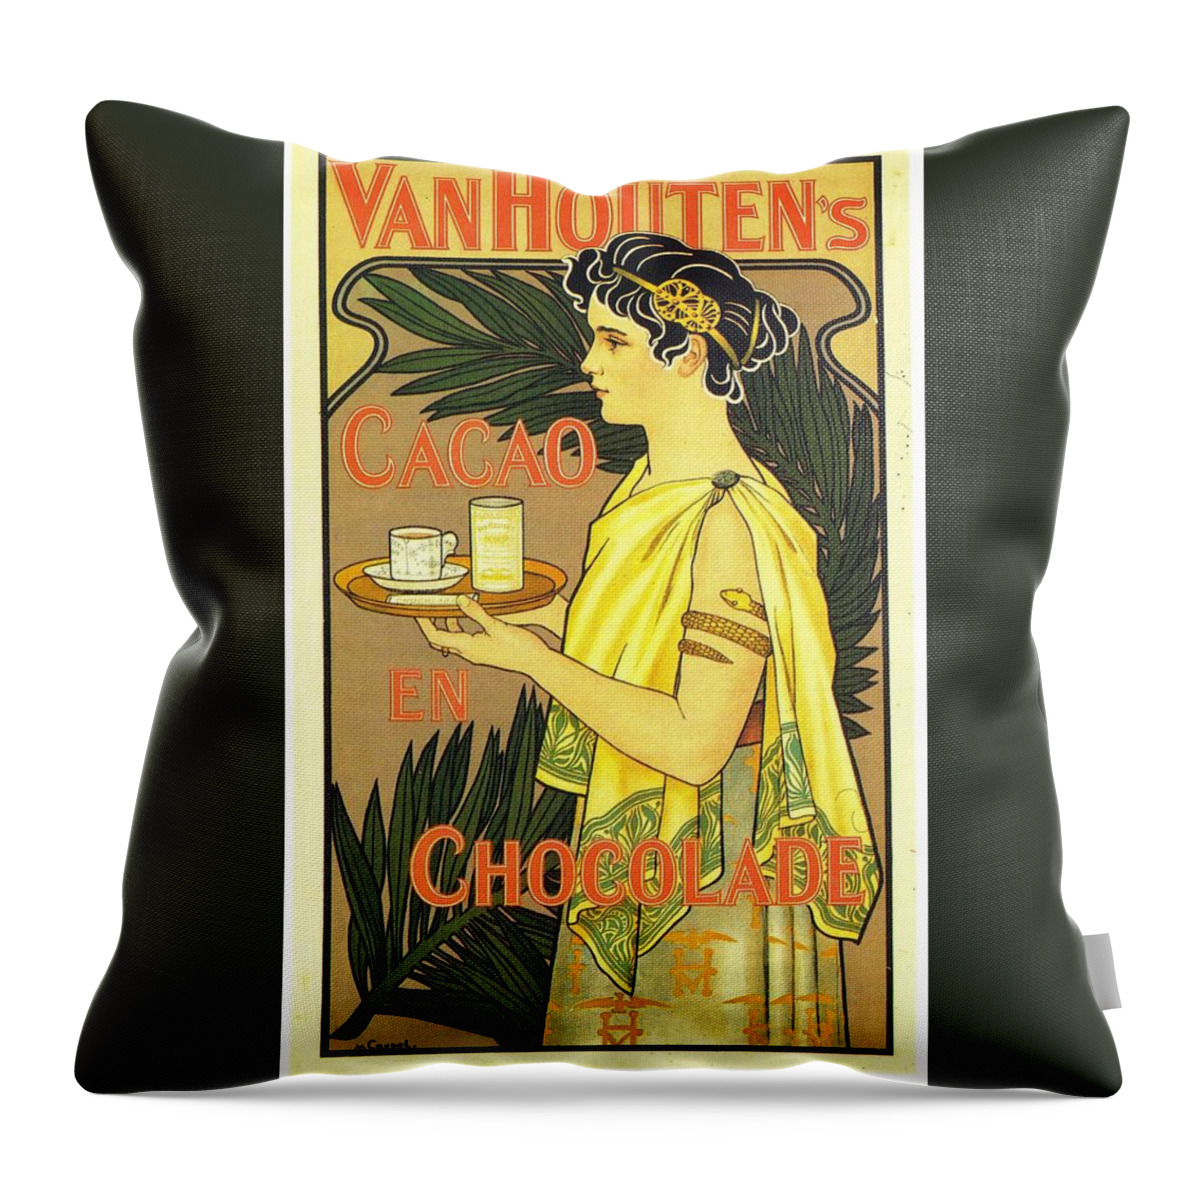 Vanhouten's Throw Pillow featuring the mixed media Van Houten's Cacao En Chocolate - Vintage Chocolate Advertising Poster by Studio Grafiikka